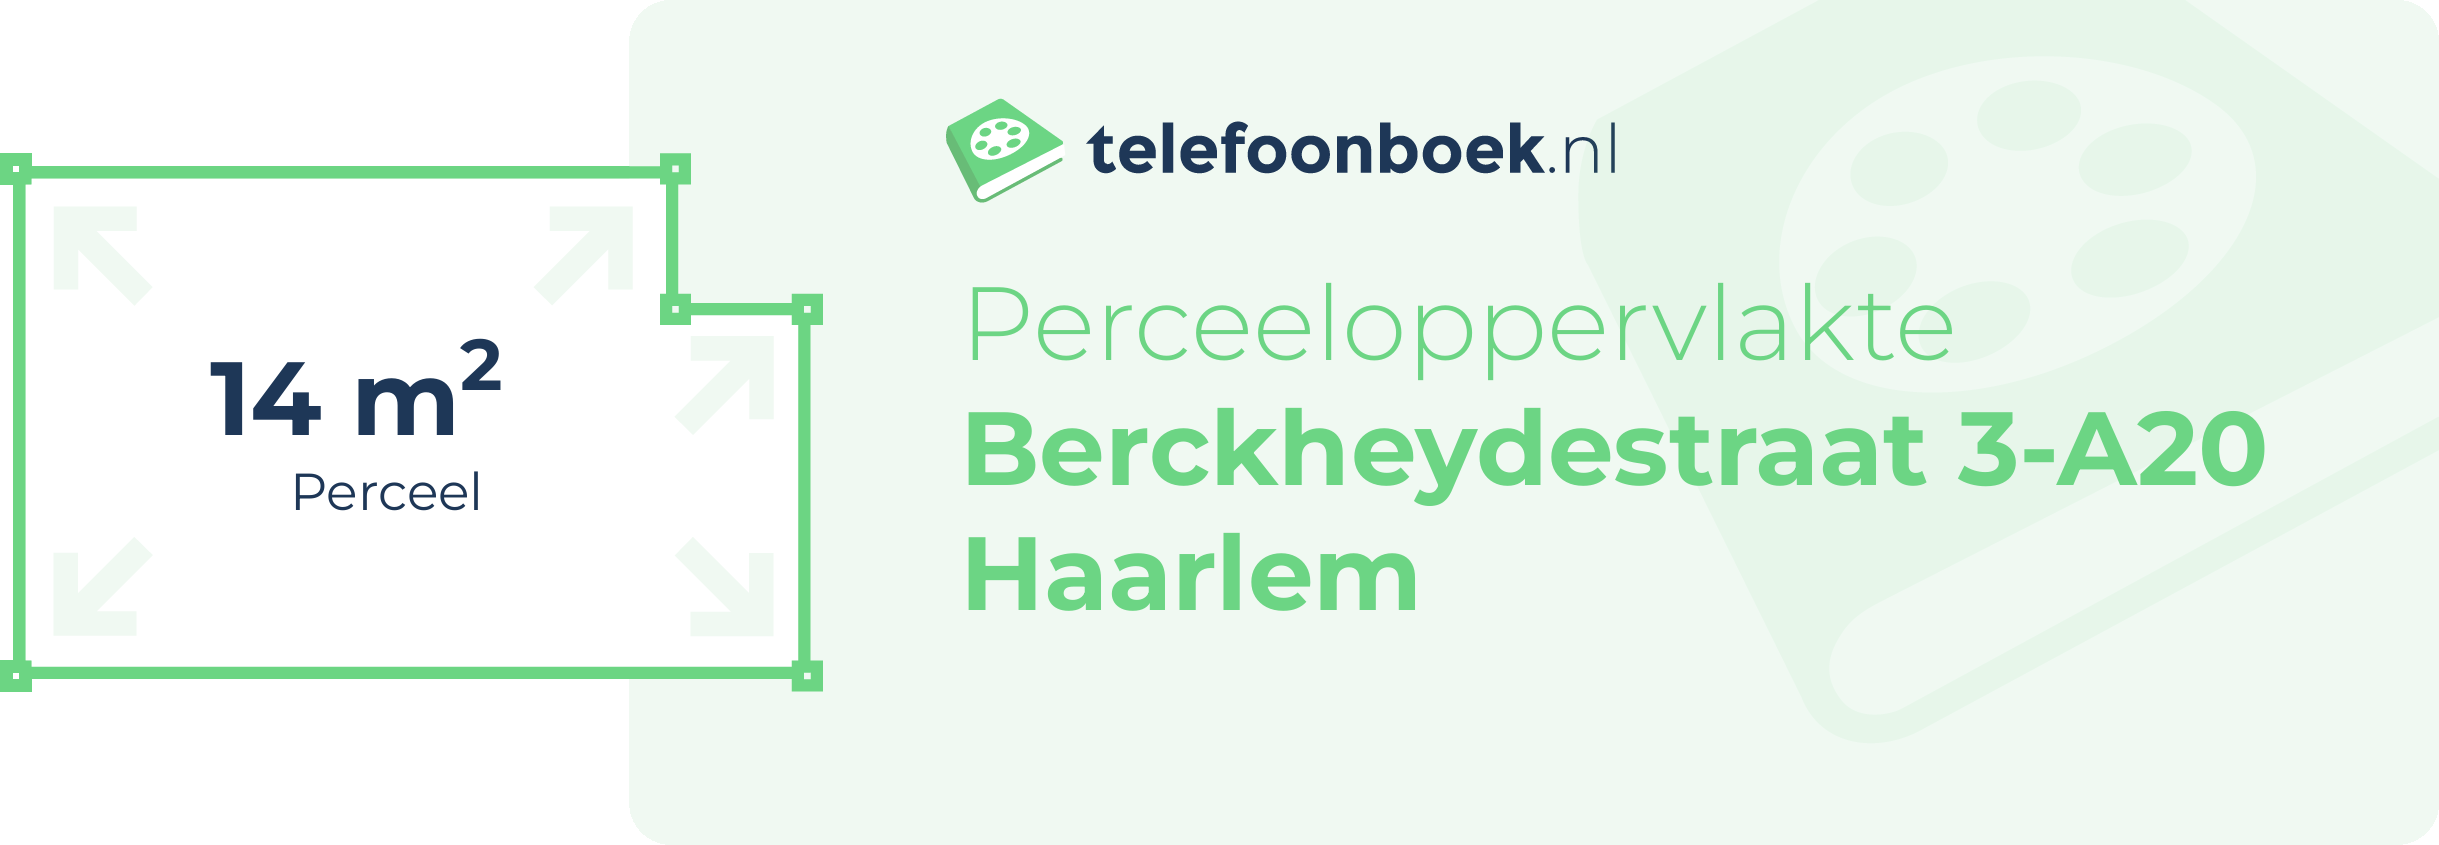 Perceeloppervlakte Berckheydestraat 3-A20 Haarlem